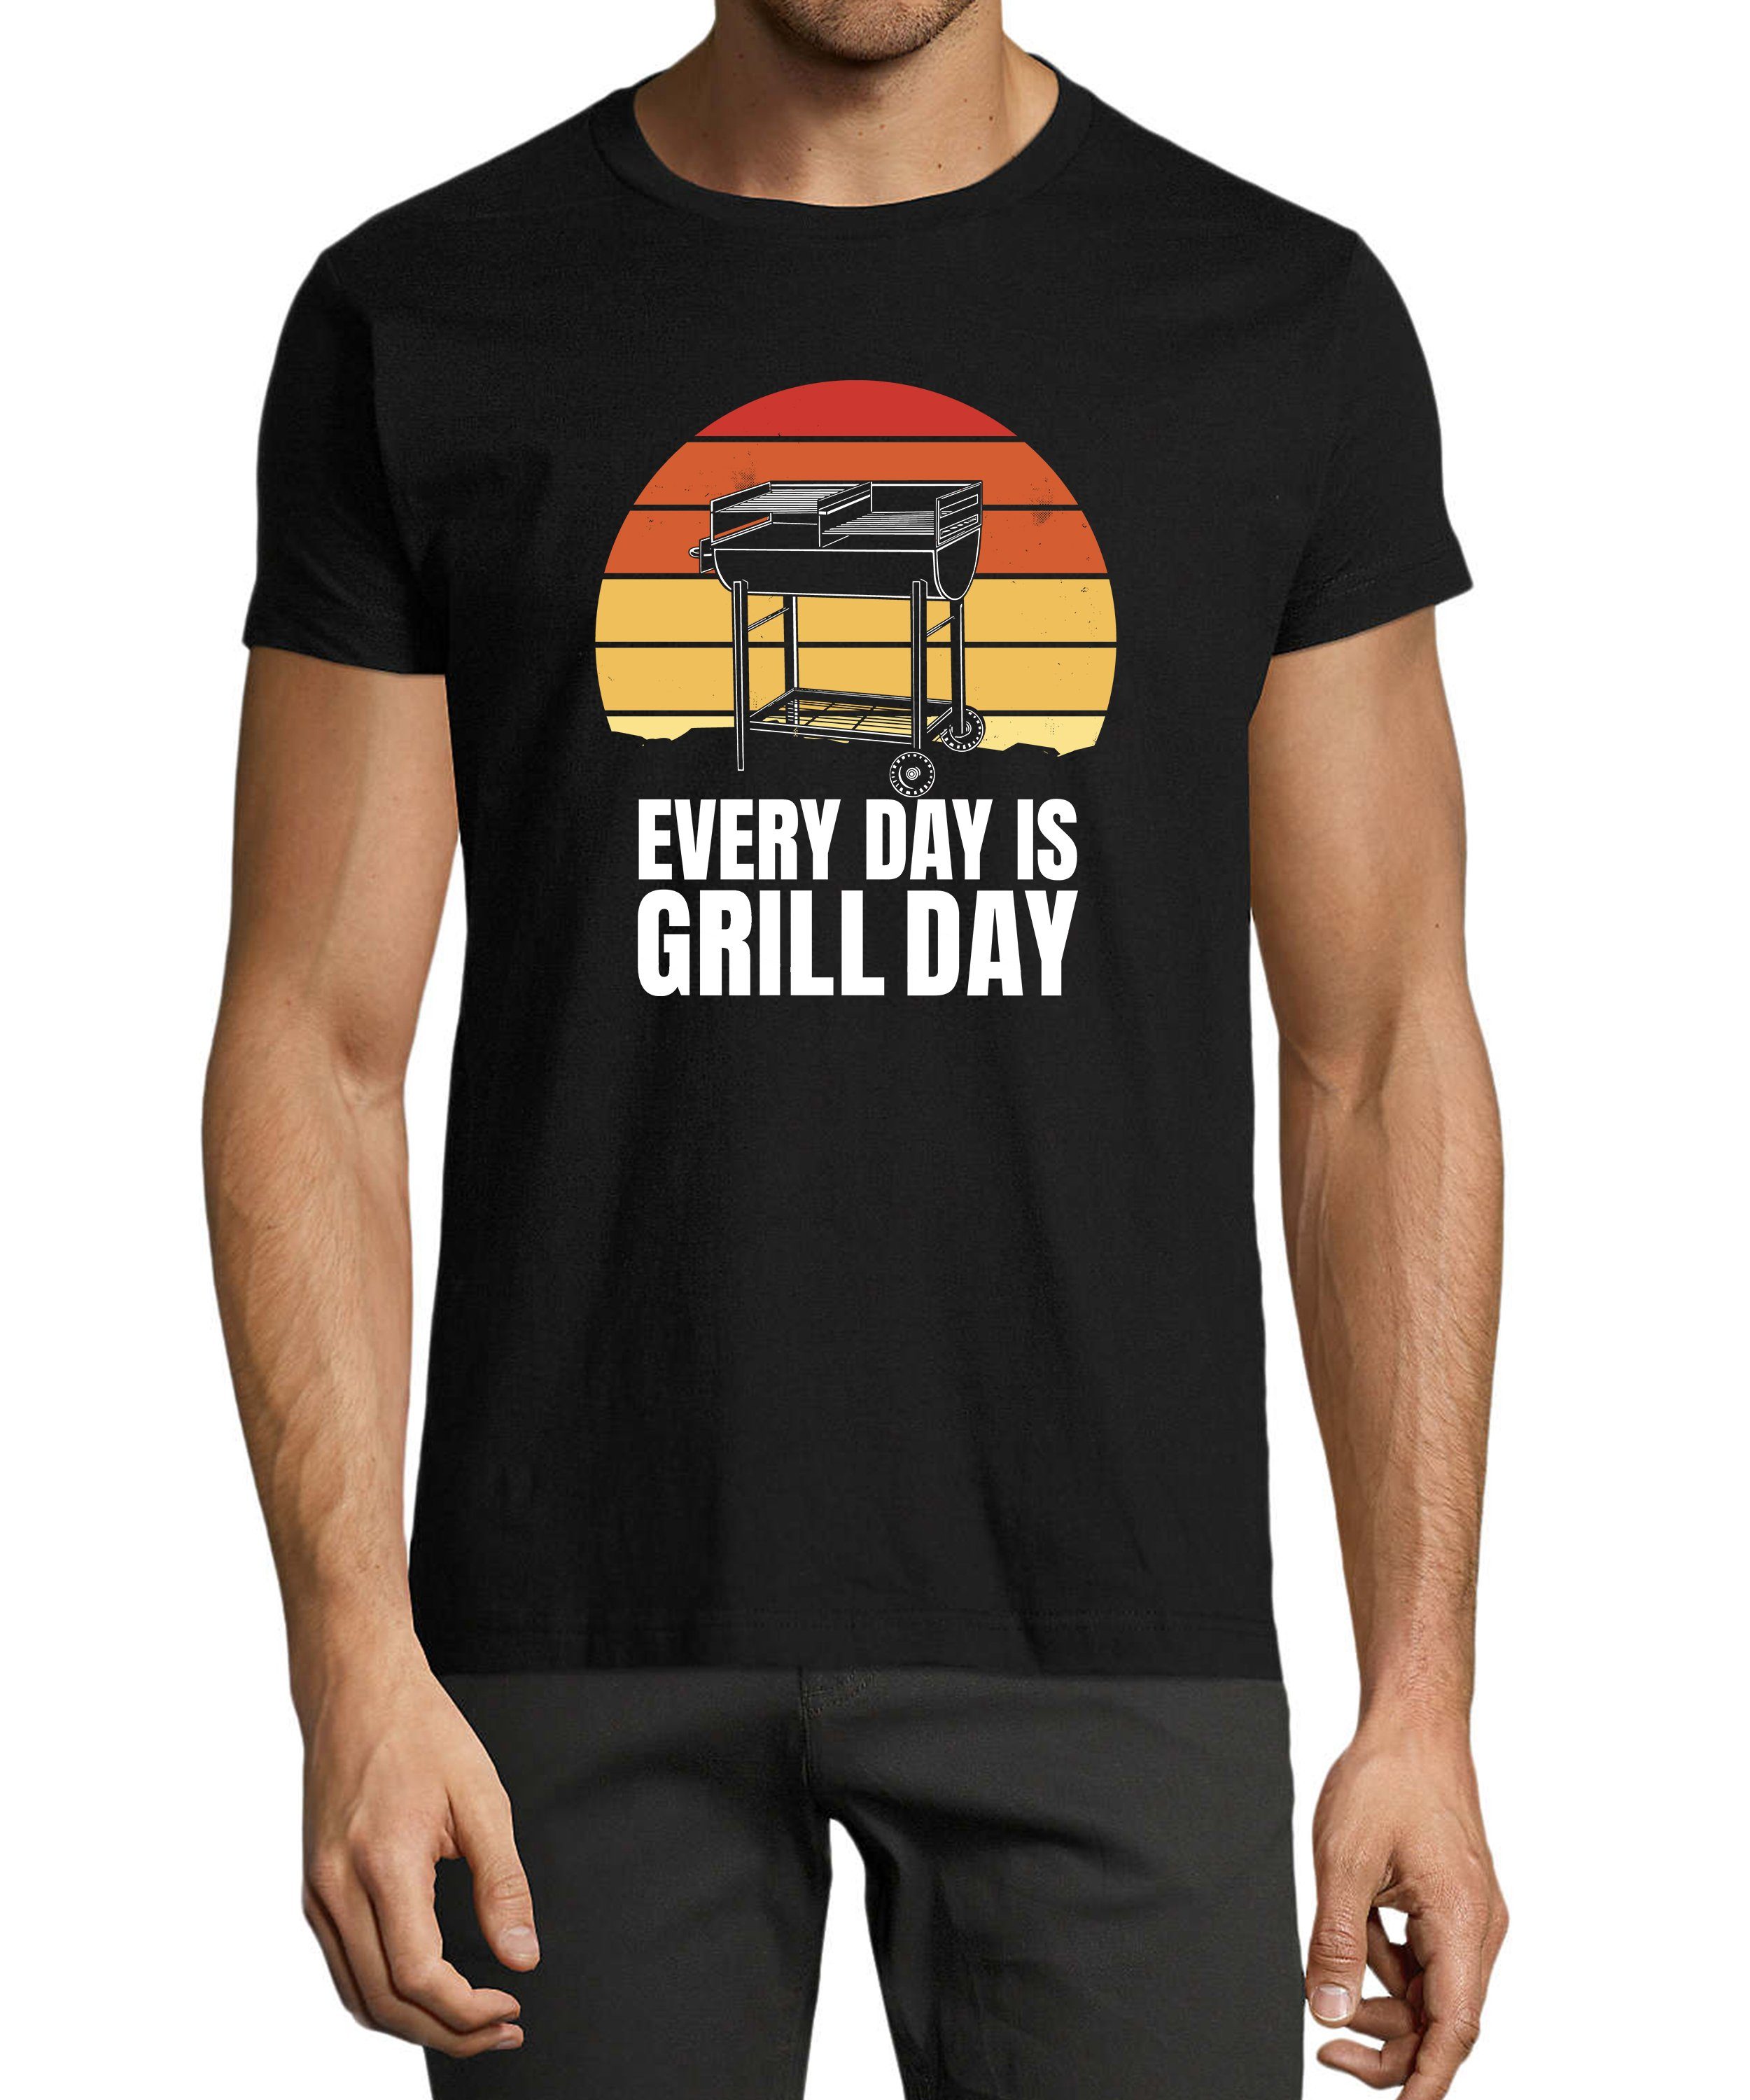 Print Day Fit, Herren Grill Baumwollshirt Aufdruck - Regular BBQ T-Shirt mit Day Grill Every T-Shirt Shirt Retro schwarz i300 MyDesign24 is a